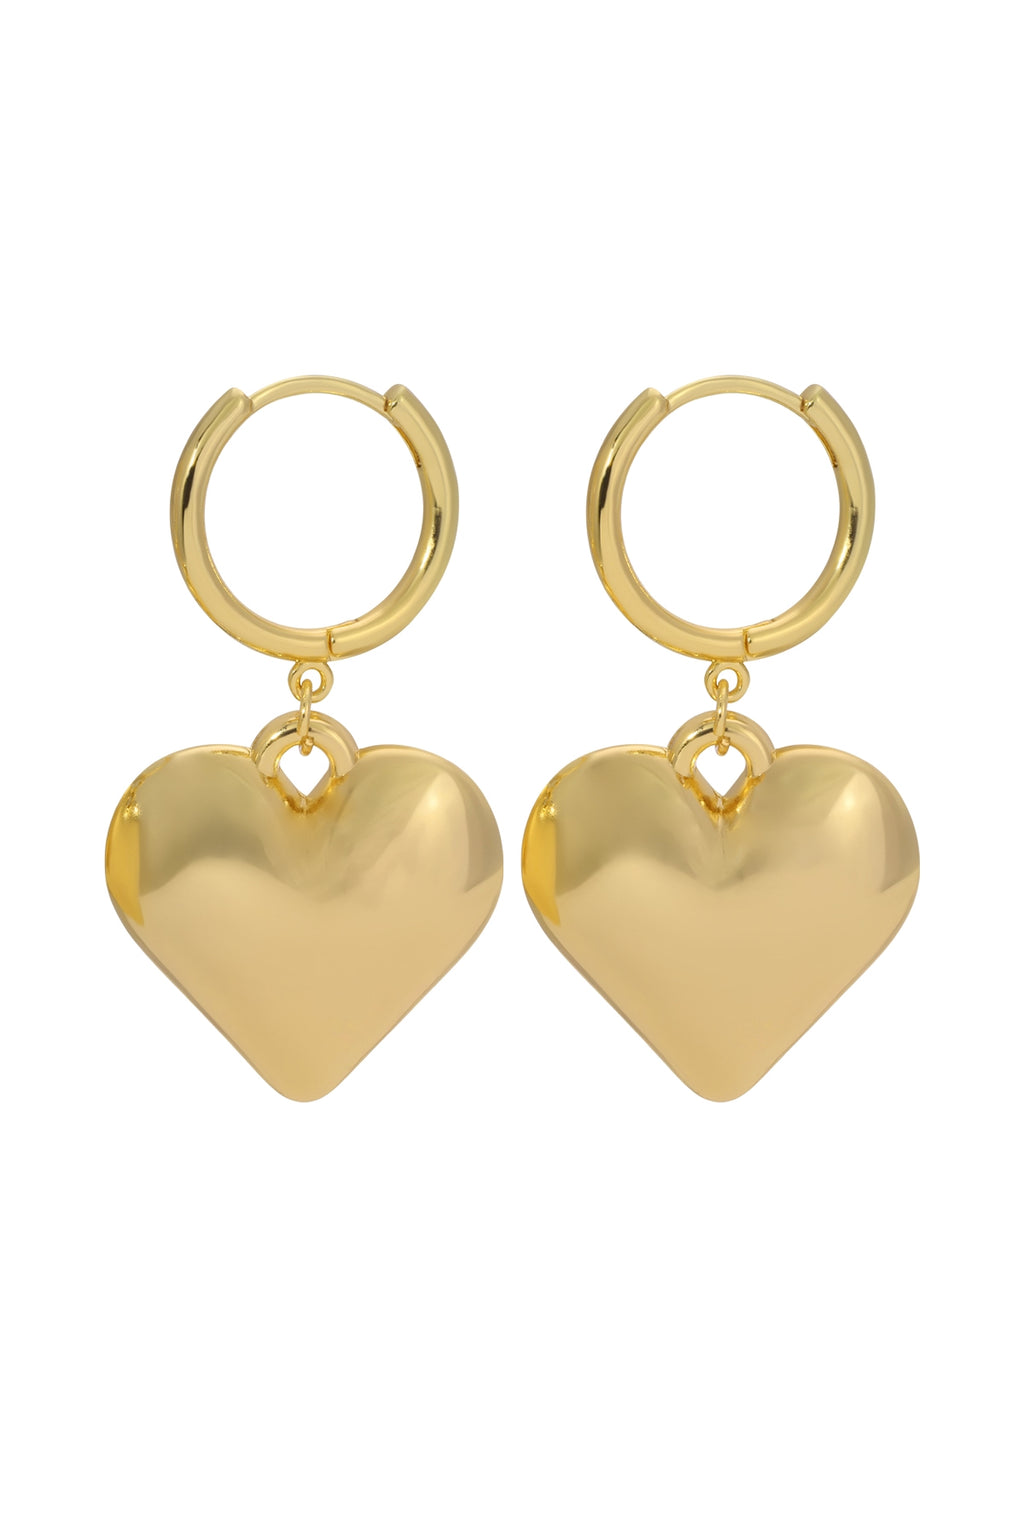 Queen of Hearts Gold Earrings